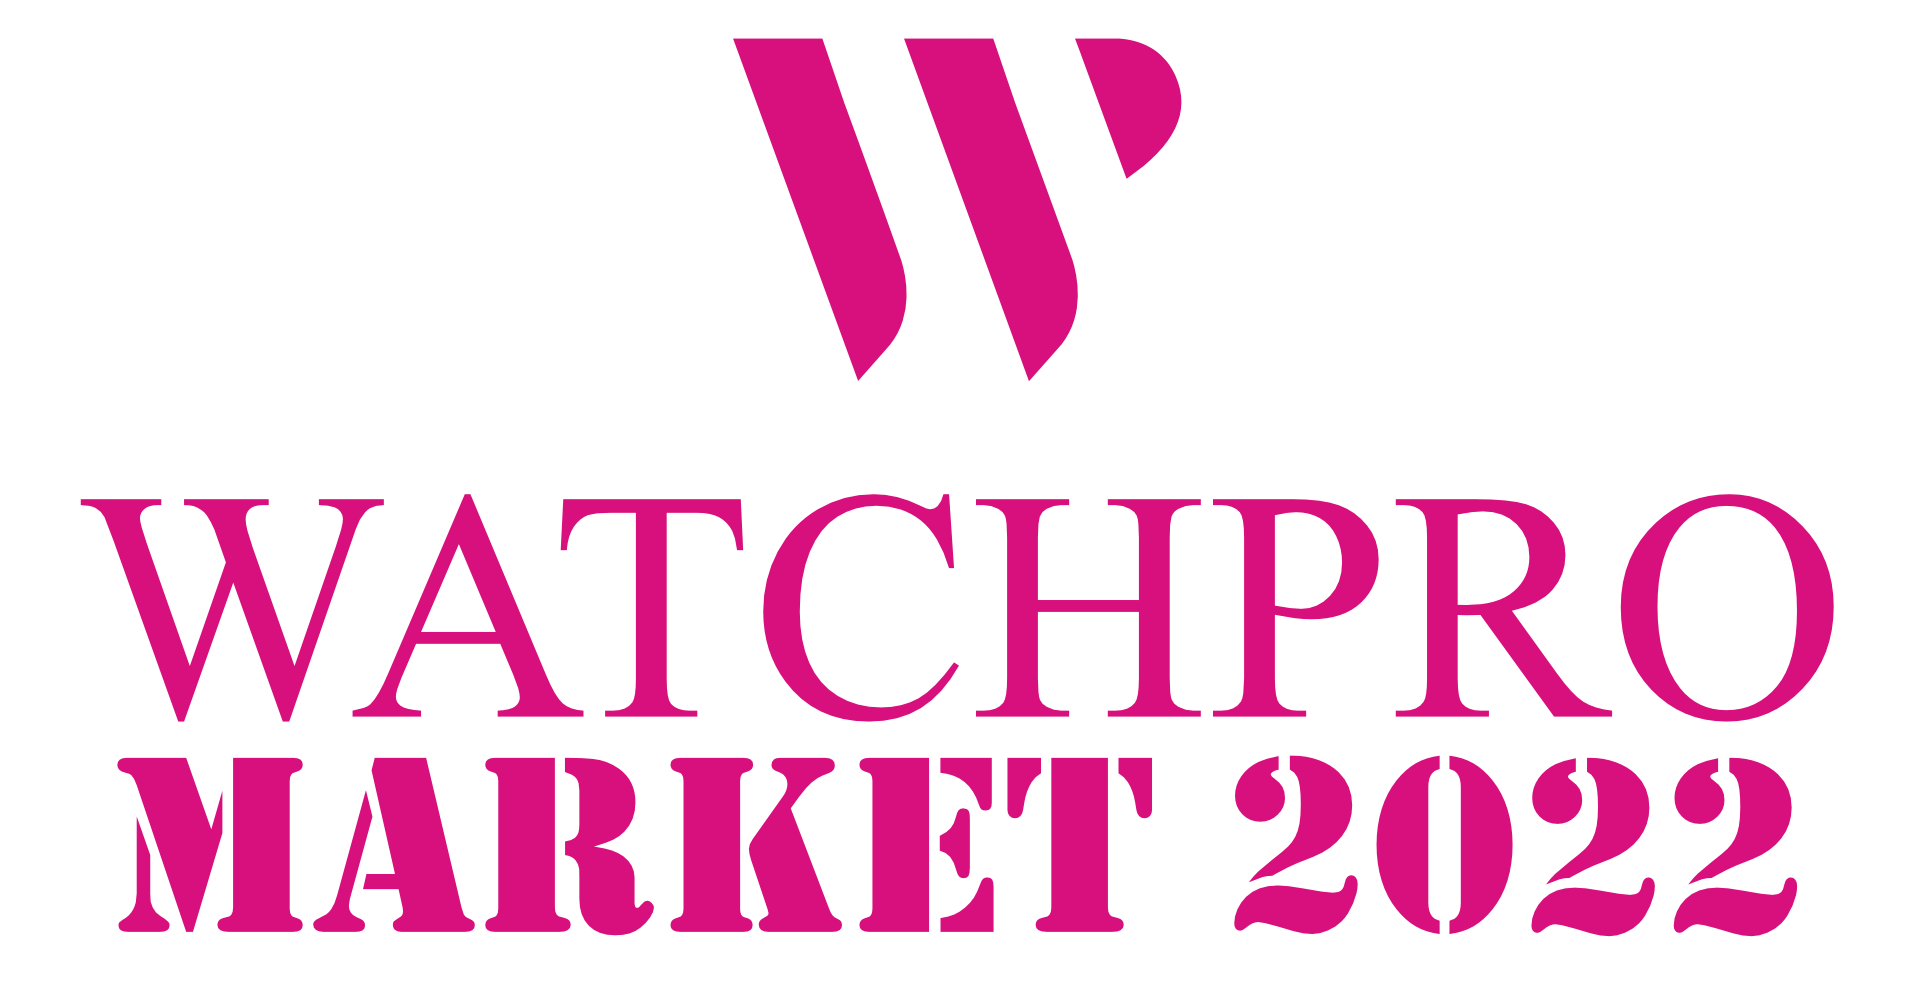 Watchpro market 2022 pink transparent